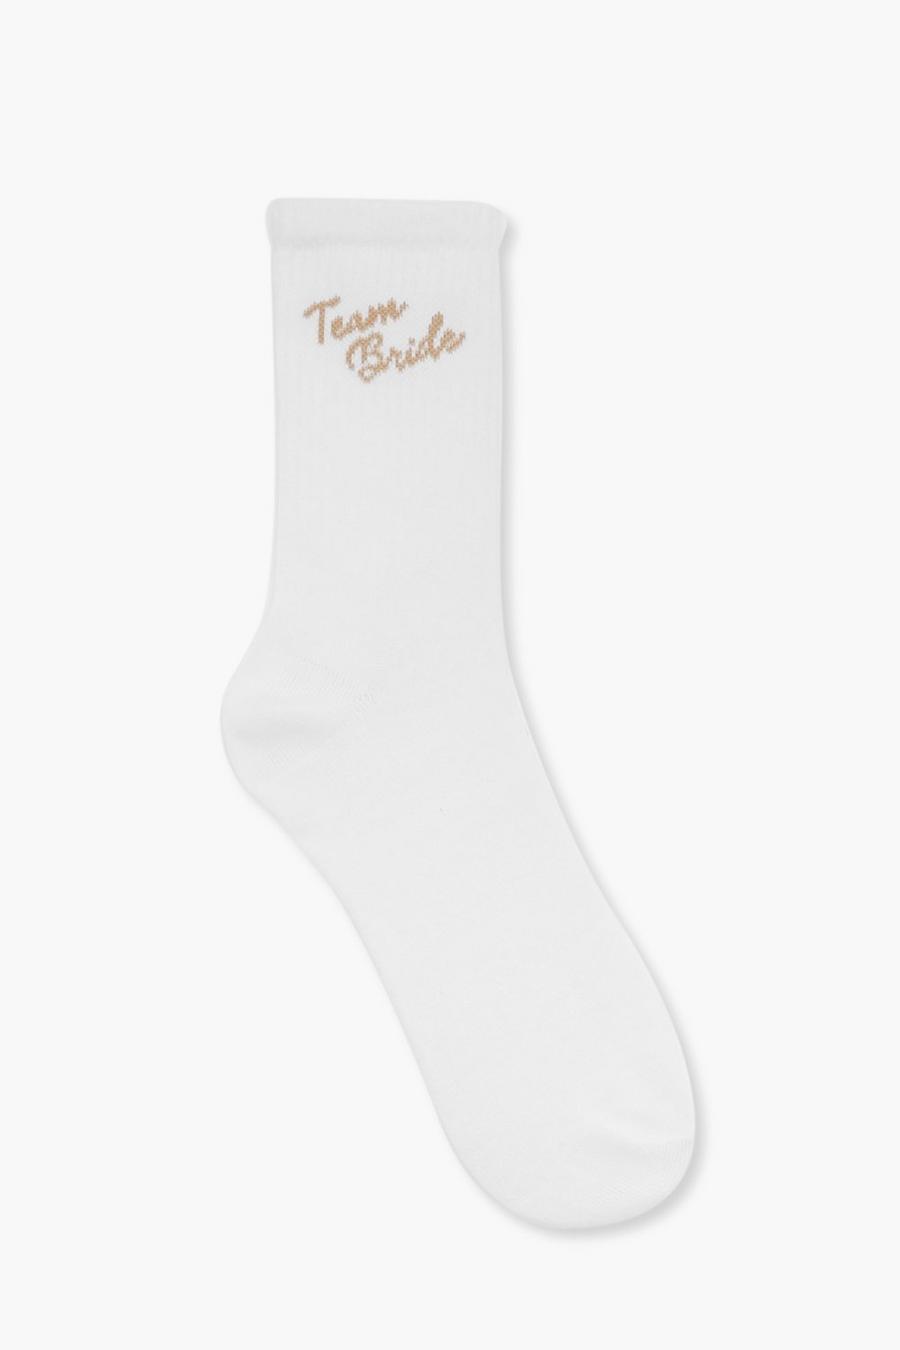 Team Bride Socks, White bianco